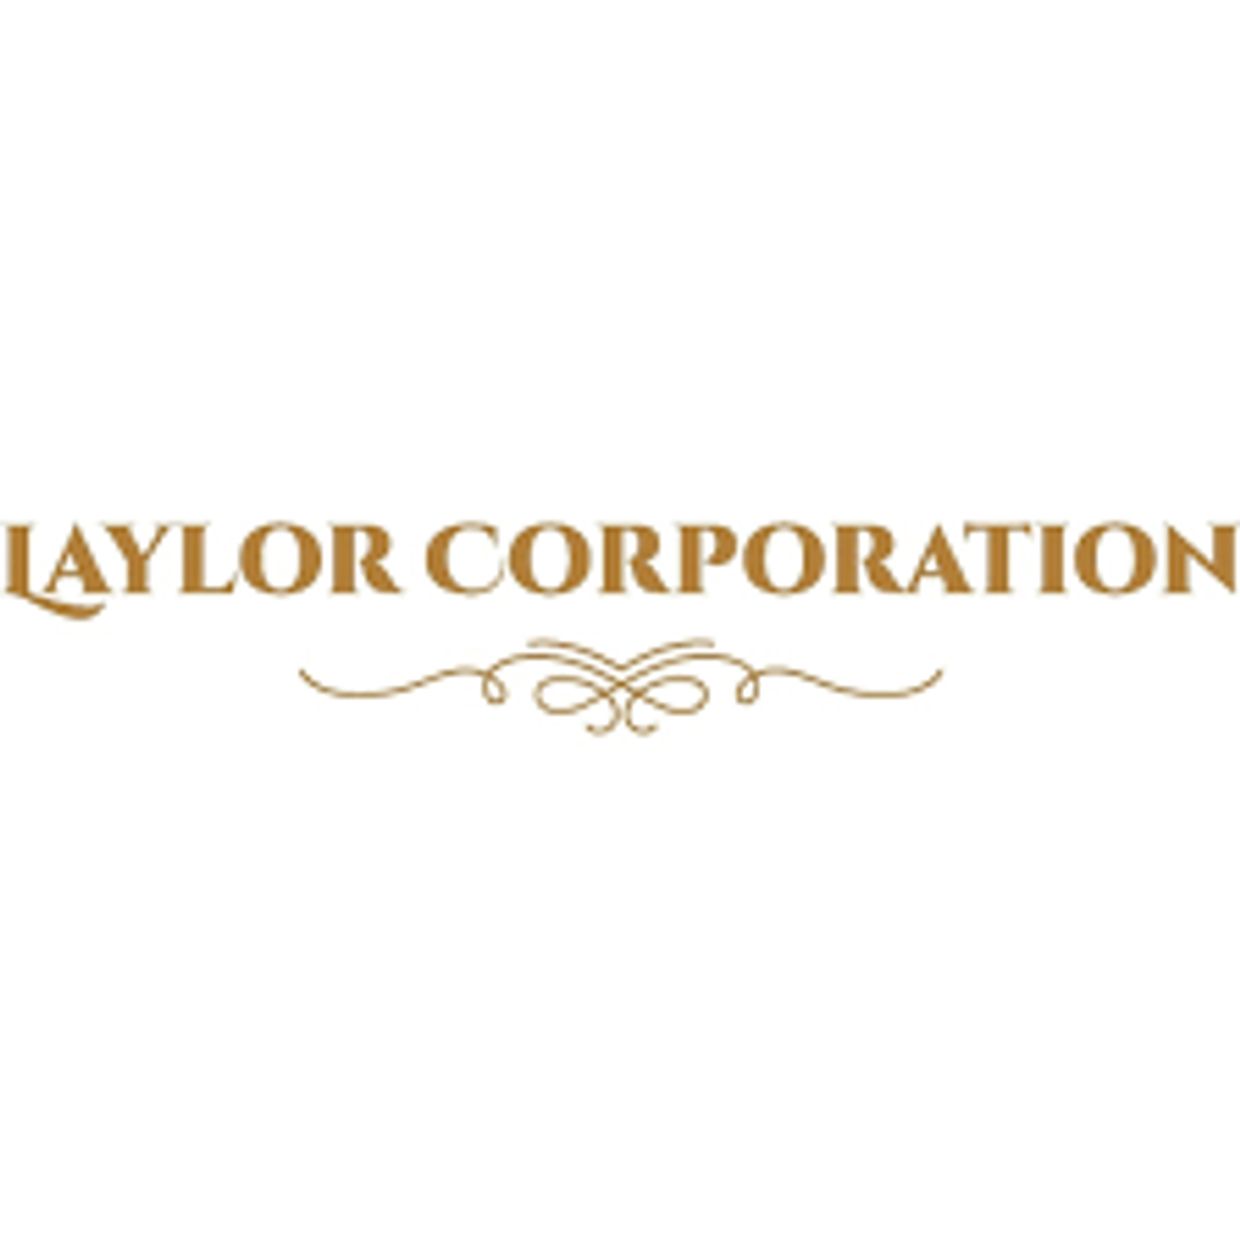 Laylor Corporation Investment Fund 
Laylorcorporation.com